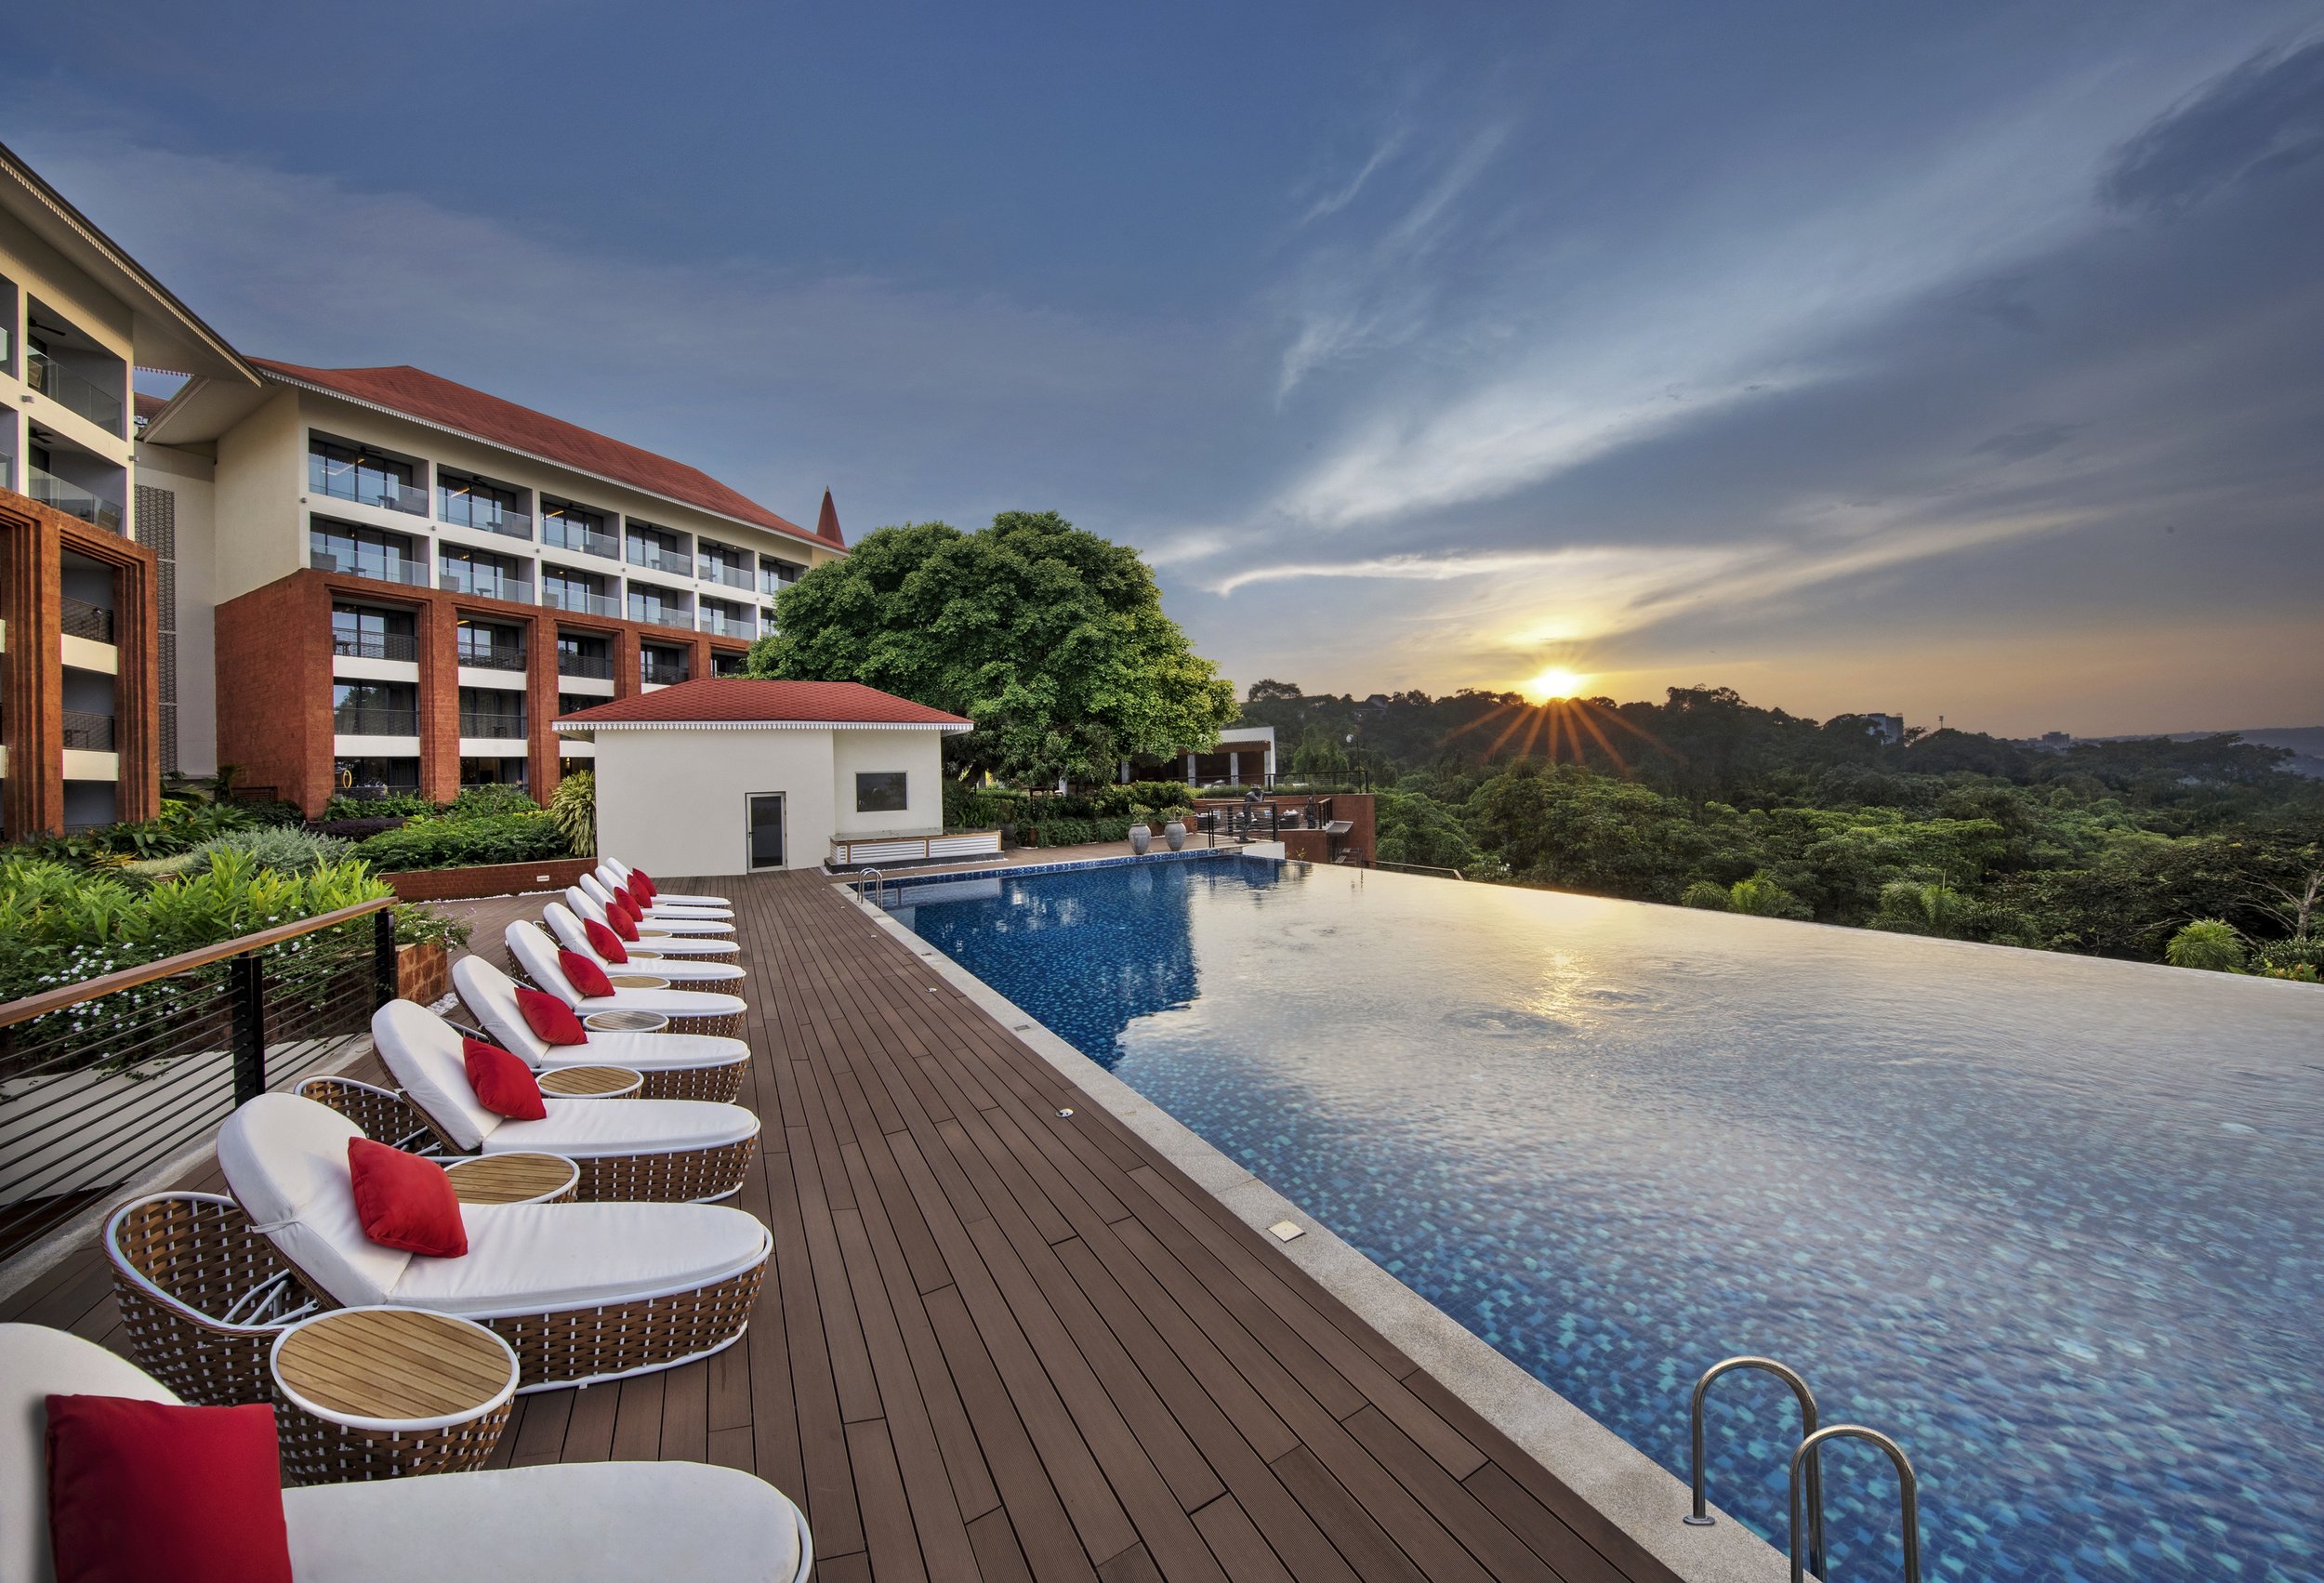 Infinity Pool at DoubleTree by Hilton Goa - Panaji.jpg